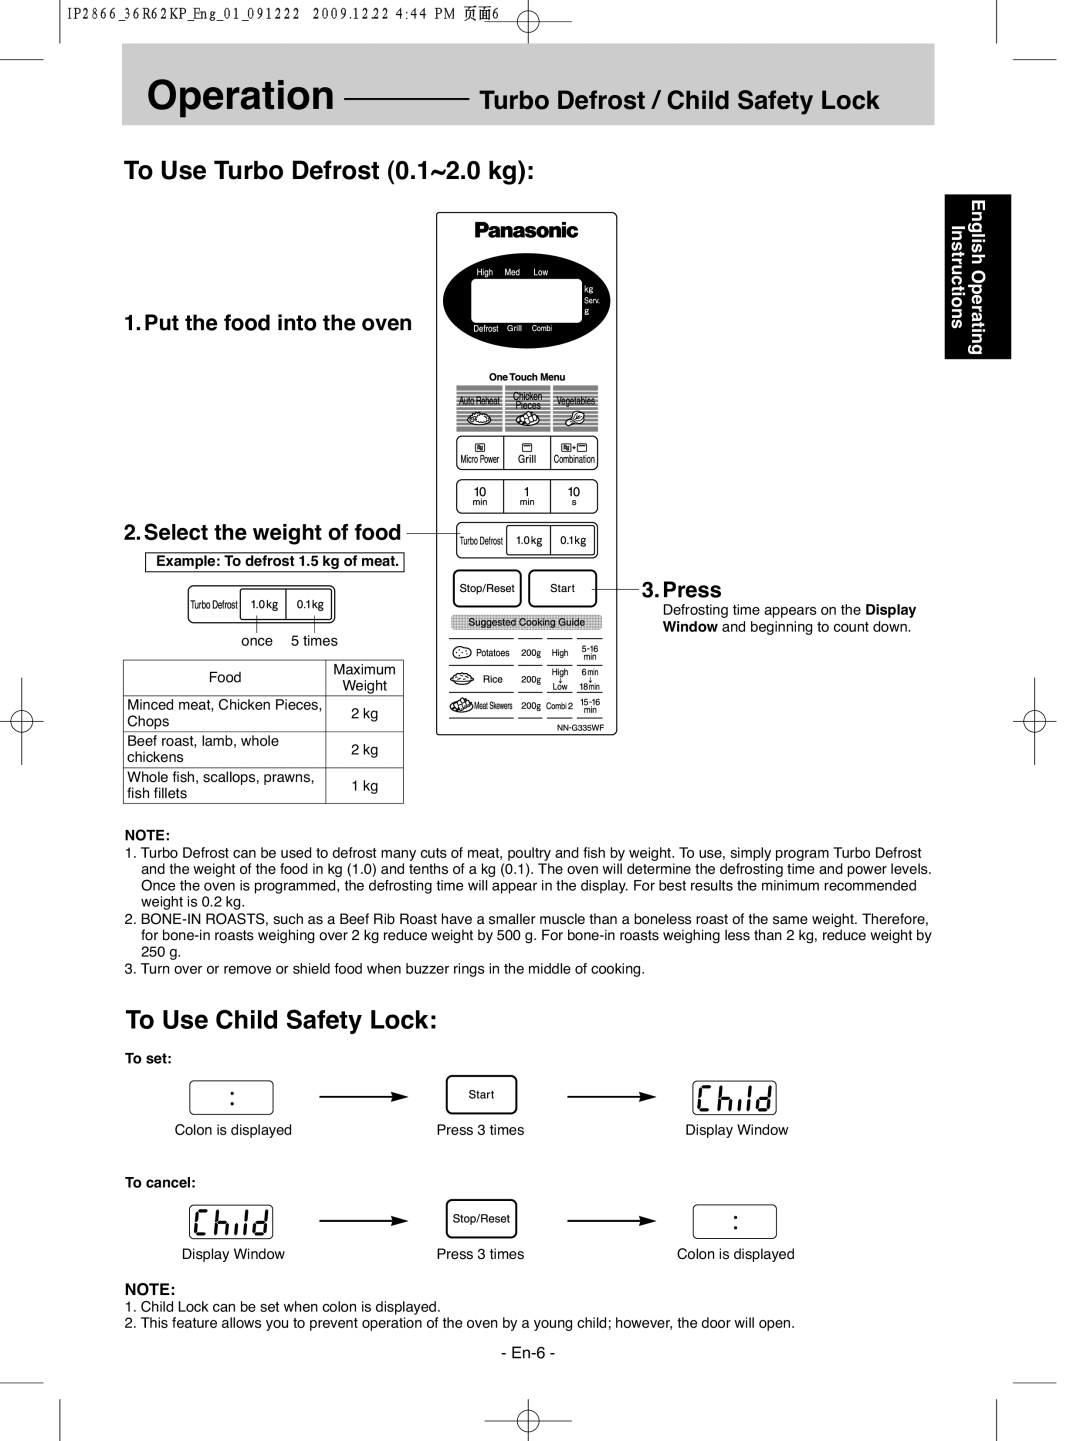 Panasonic NN-G335WF Turbo Defrost / Child Safety Lock, To Use Turbo Defrost 0.1~2.0 kg, To Use Child Safety Lock, Press 